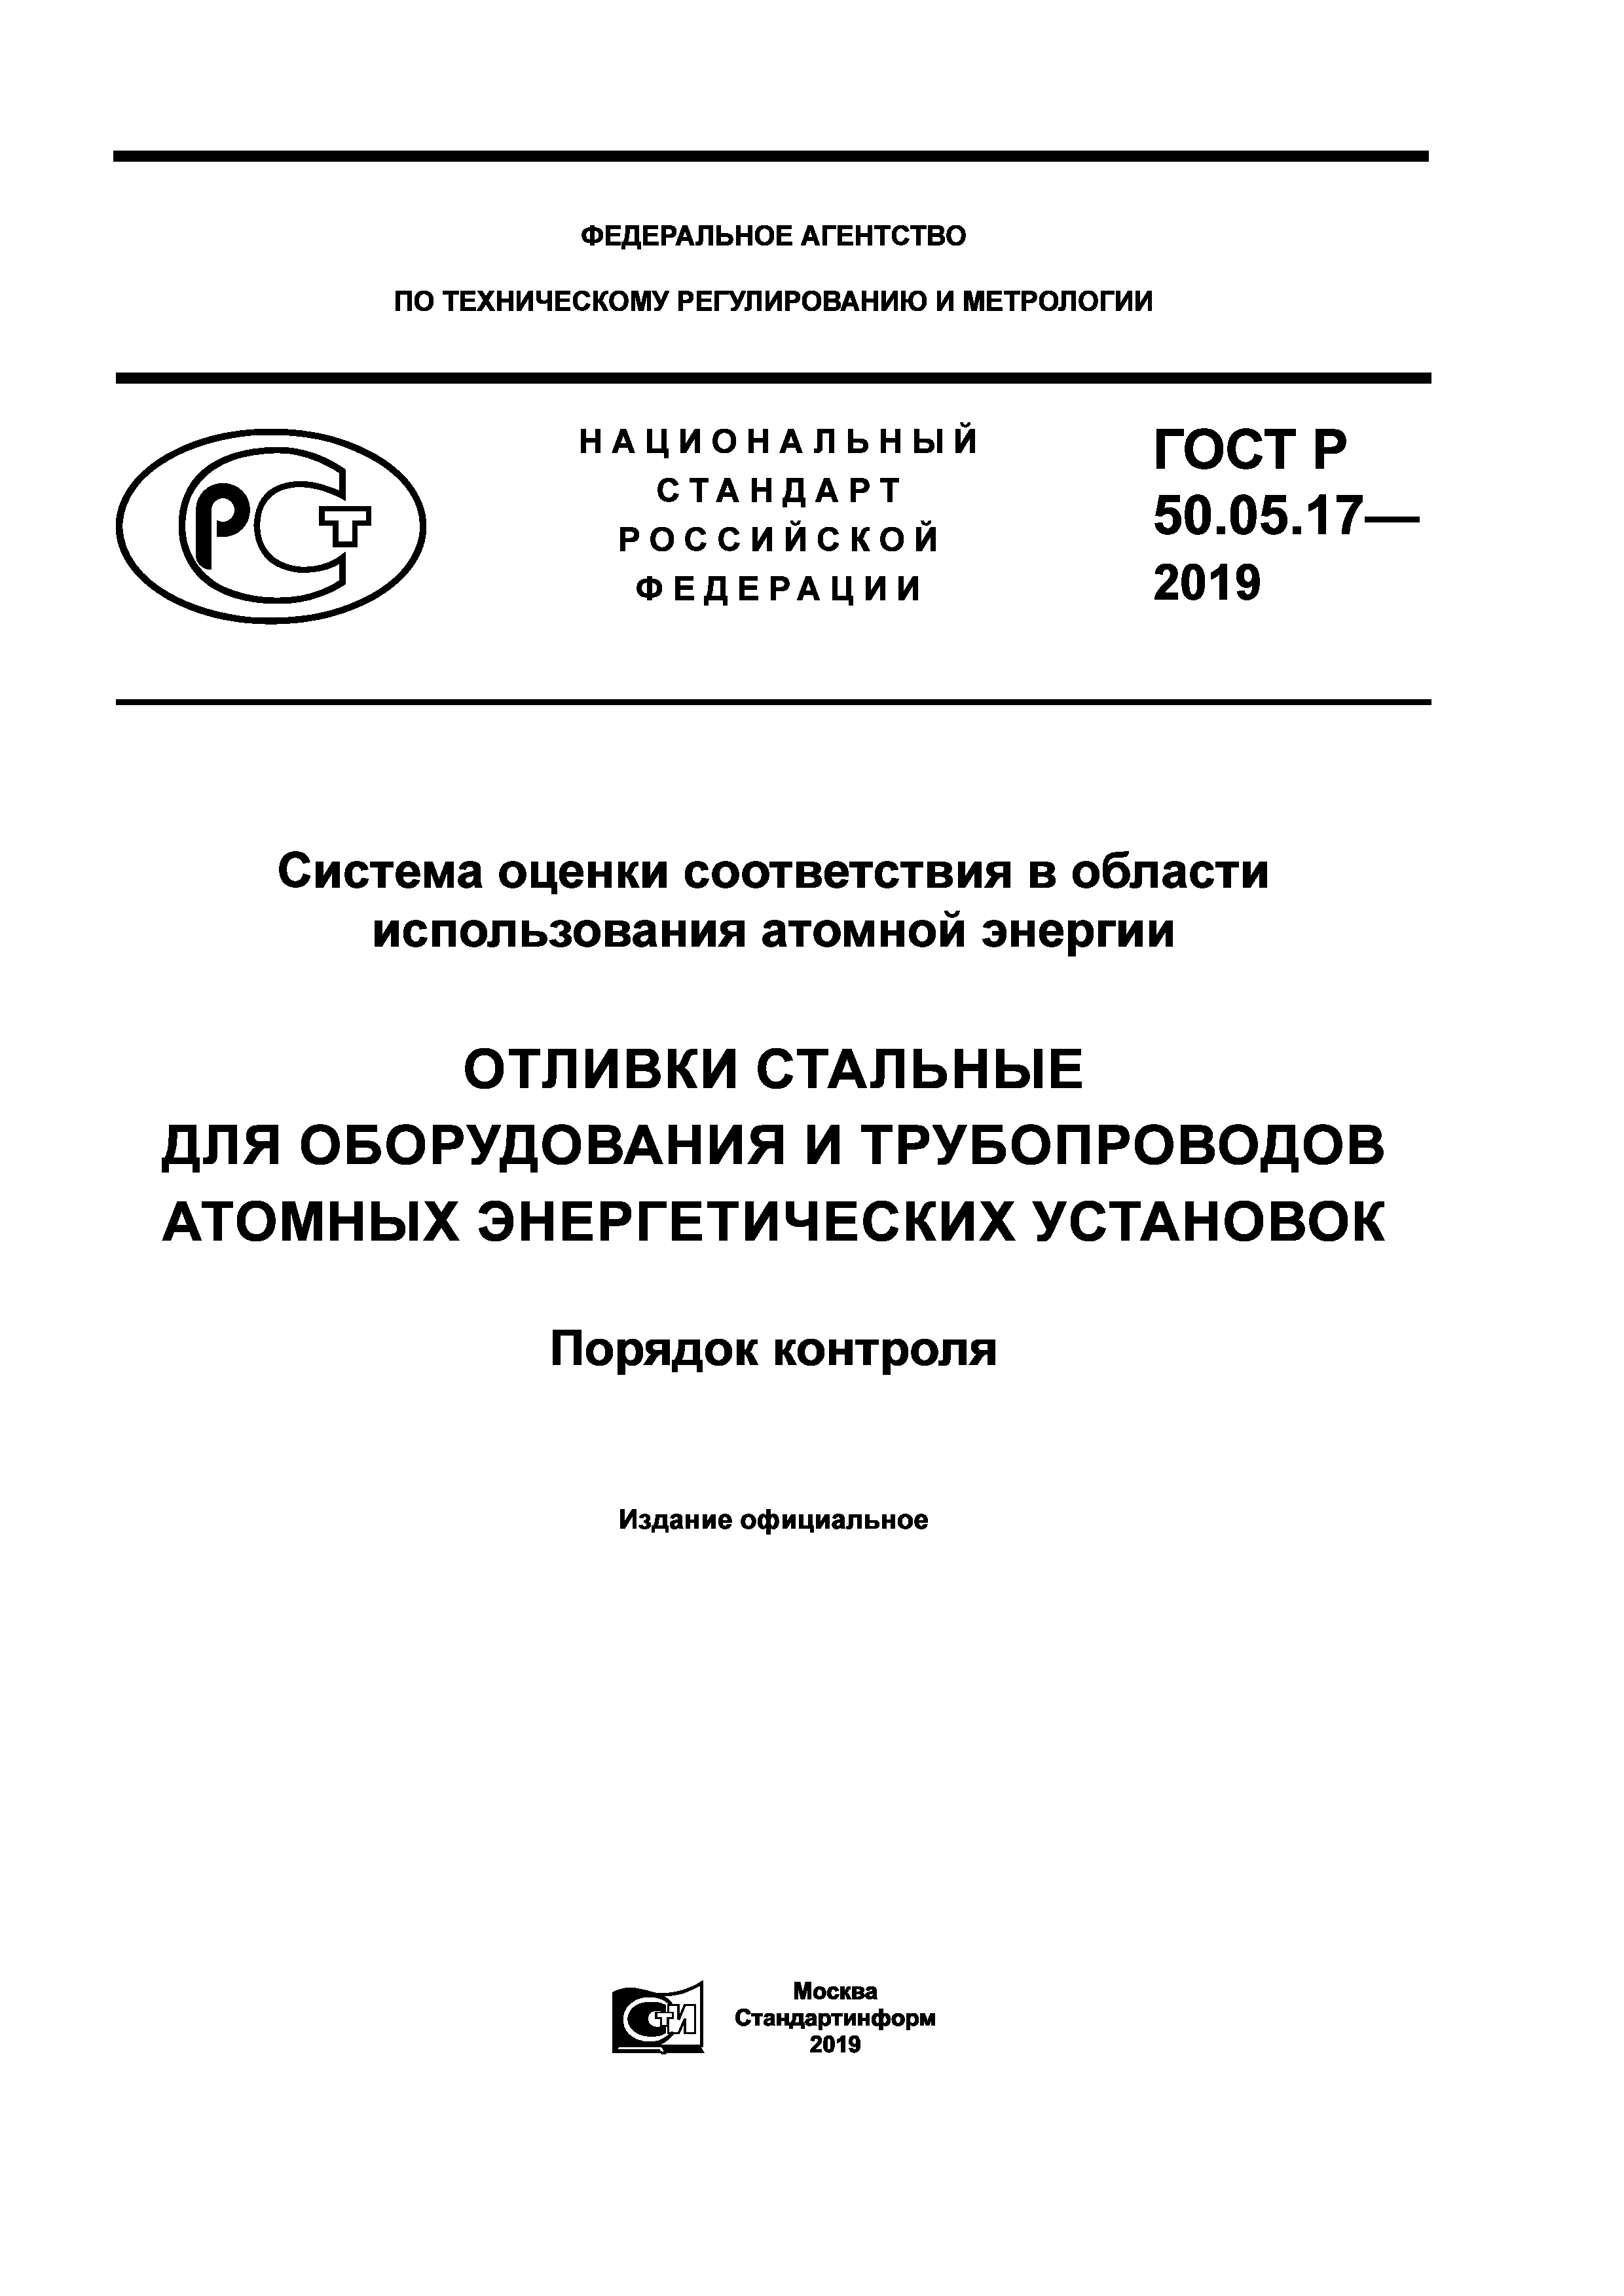 ГОСТ Р 50.05.17-2019